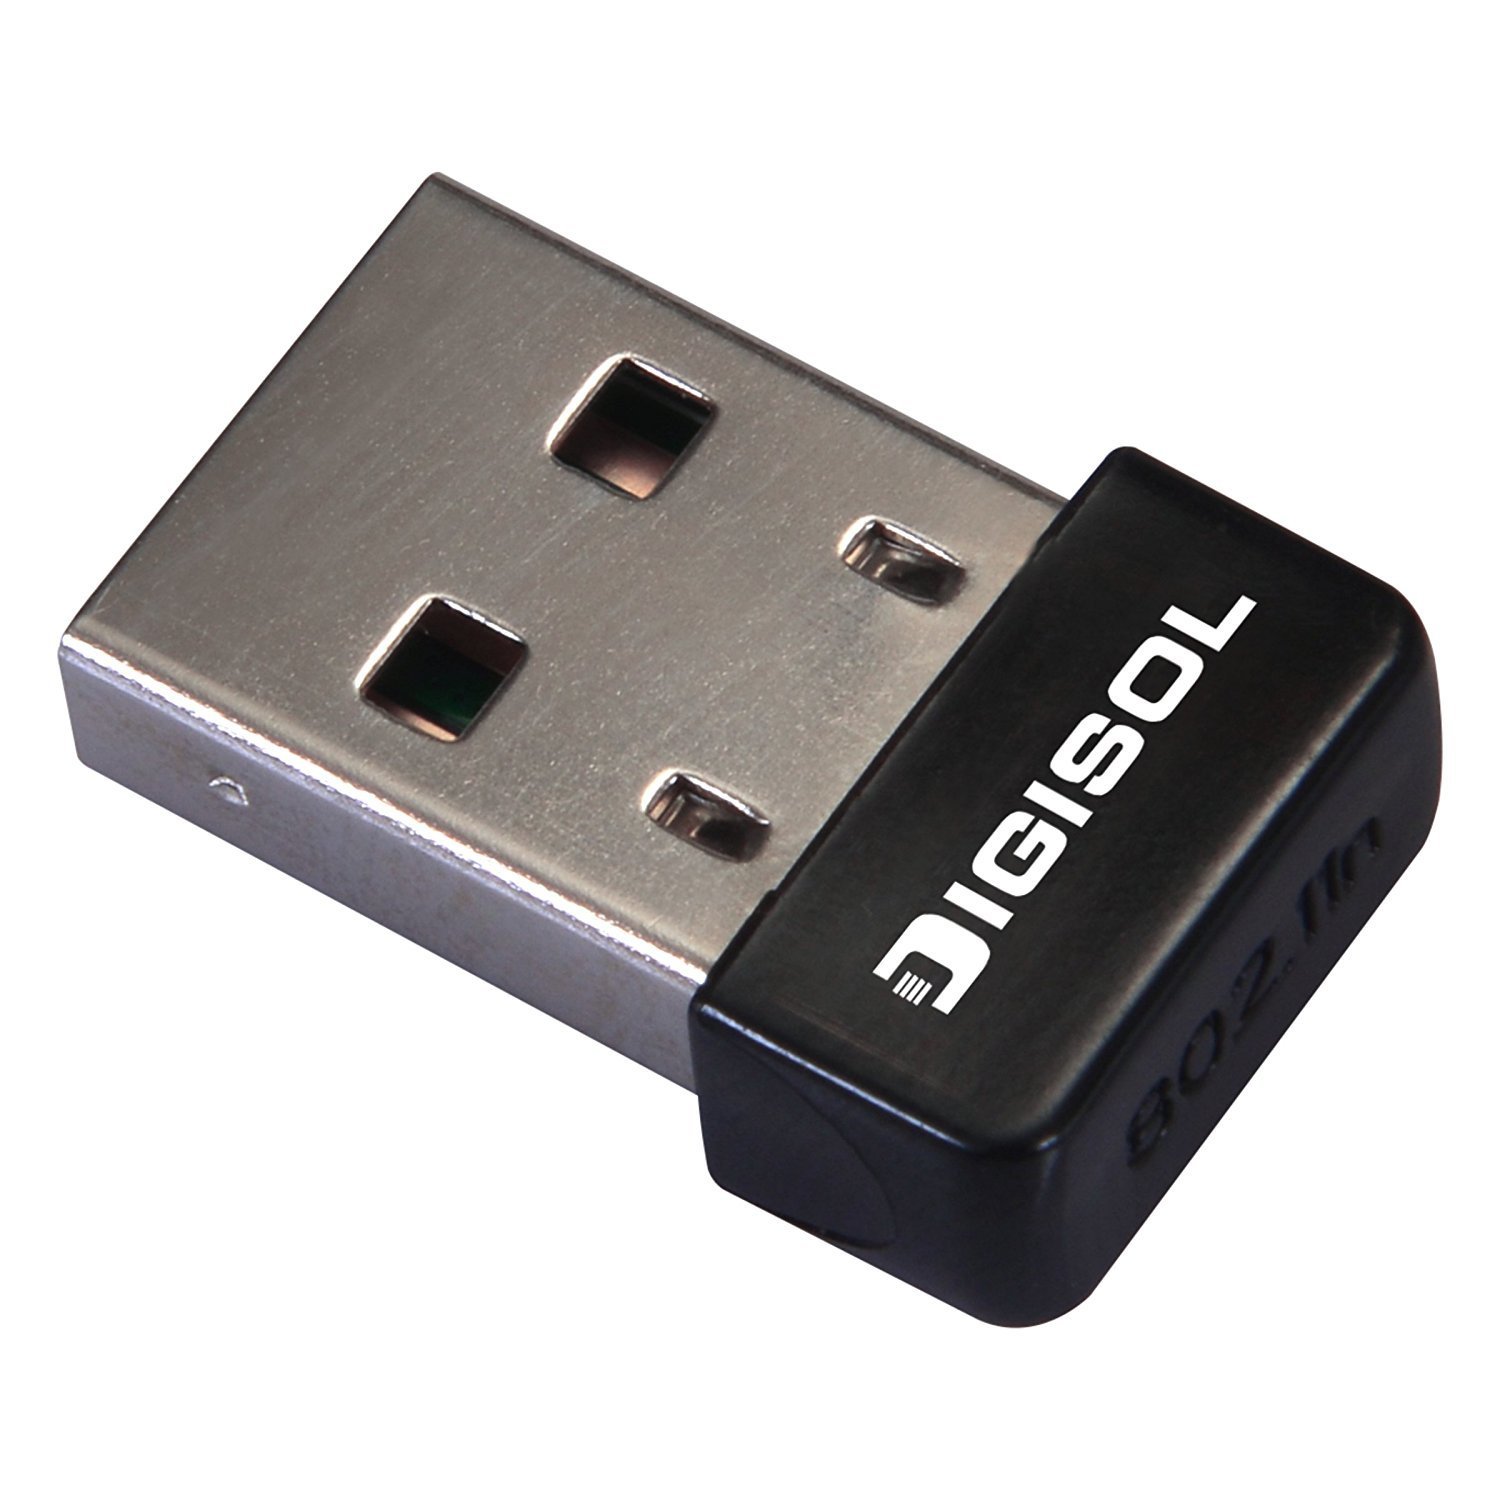 Digisol DG-WN3150NU Wireless USB Adapter